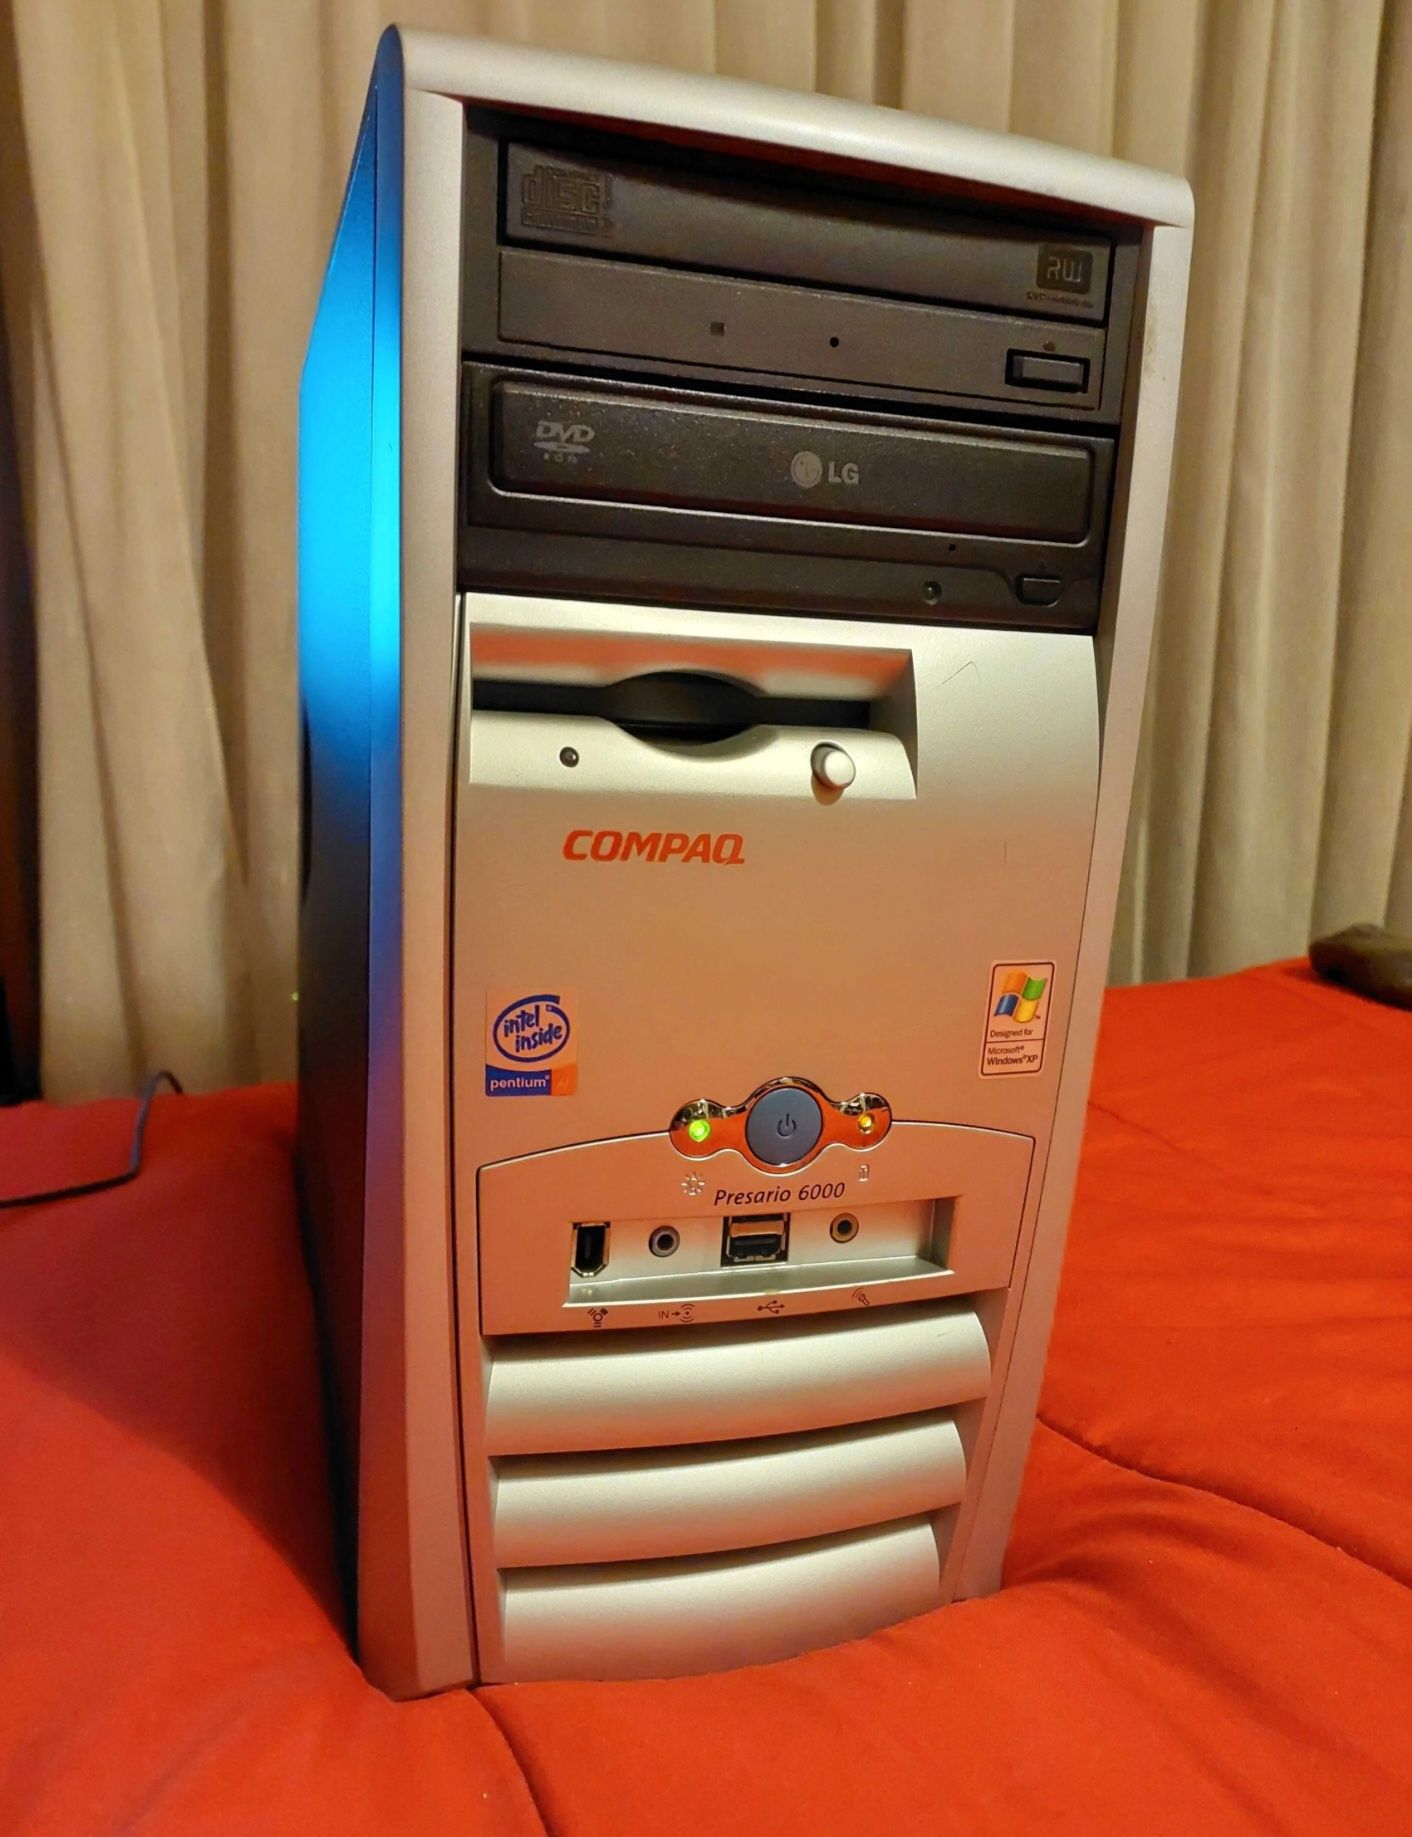 Compaq Presario 6000 - Winxp